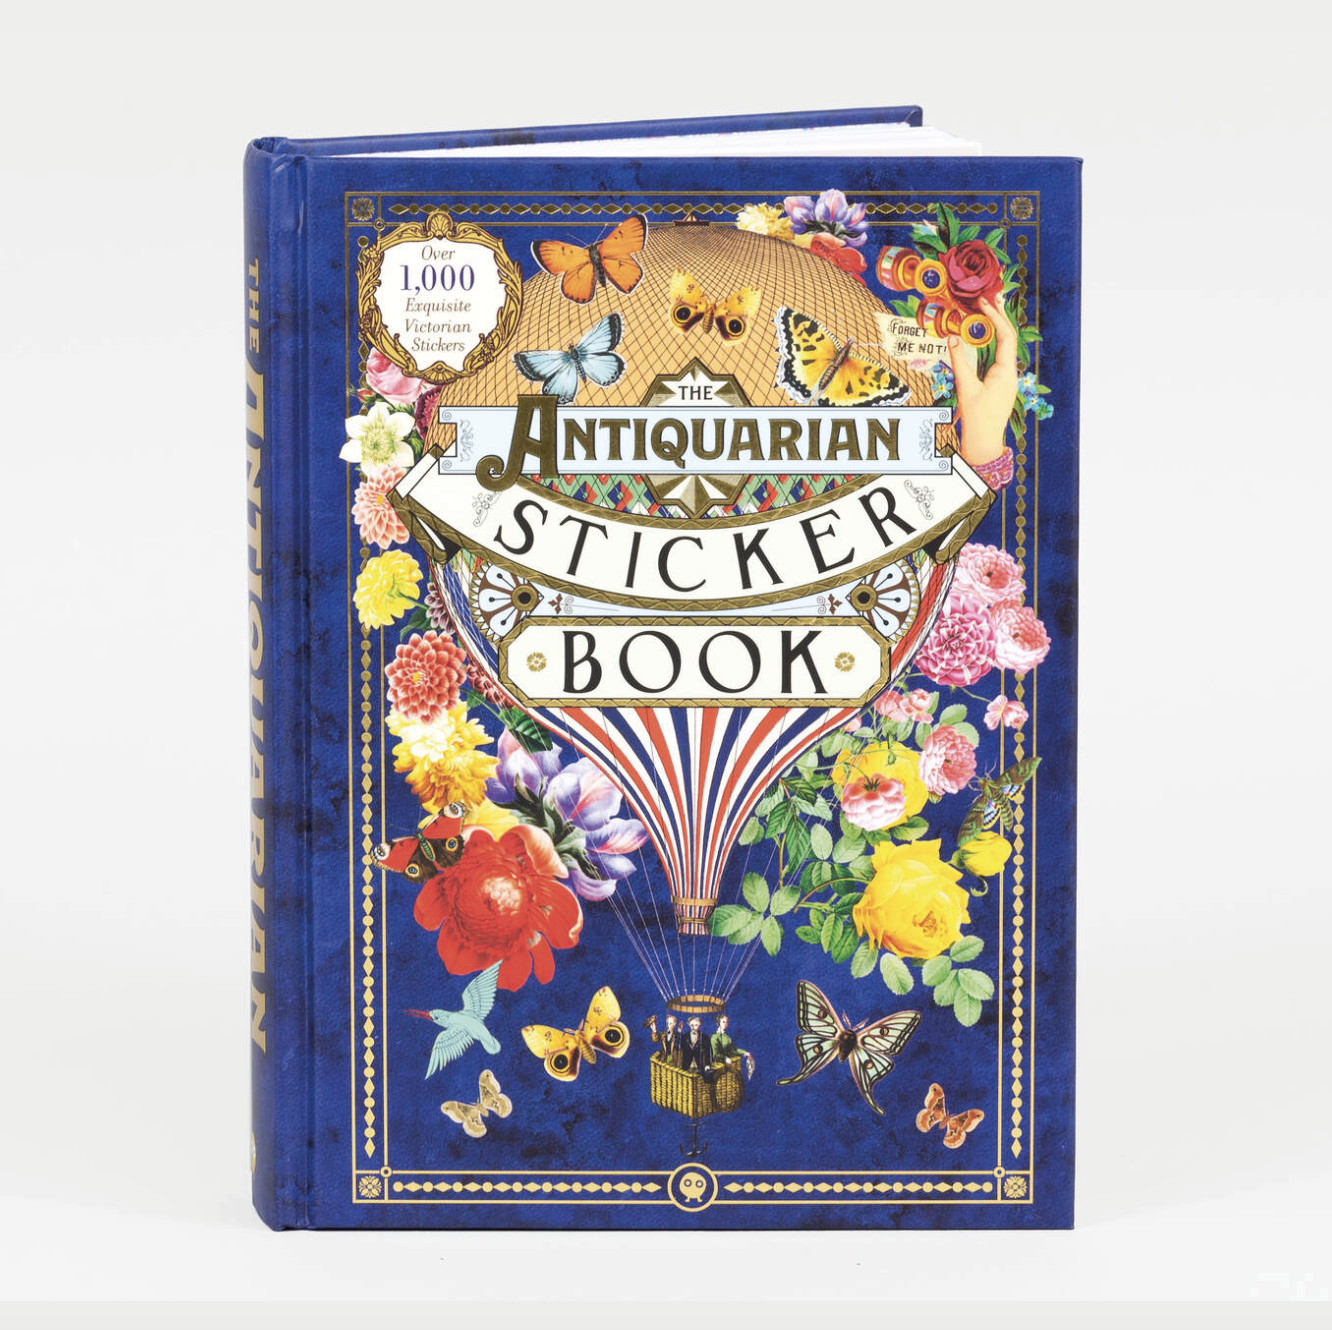 The Antiquarian Sticker Book - Victorian